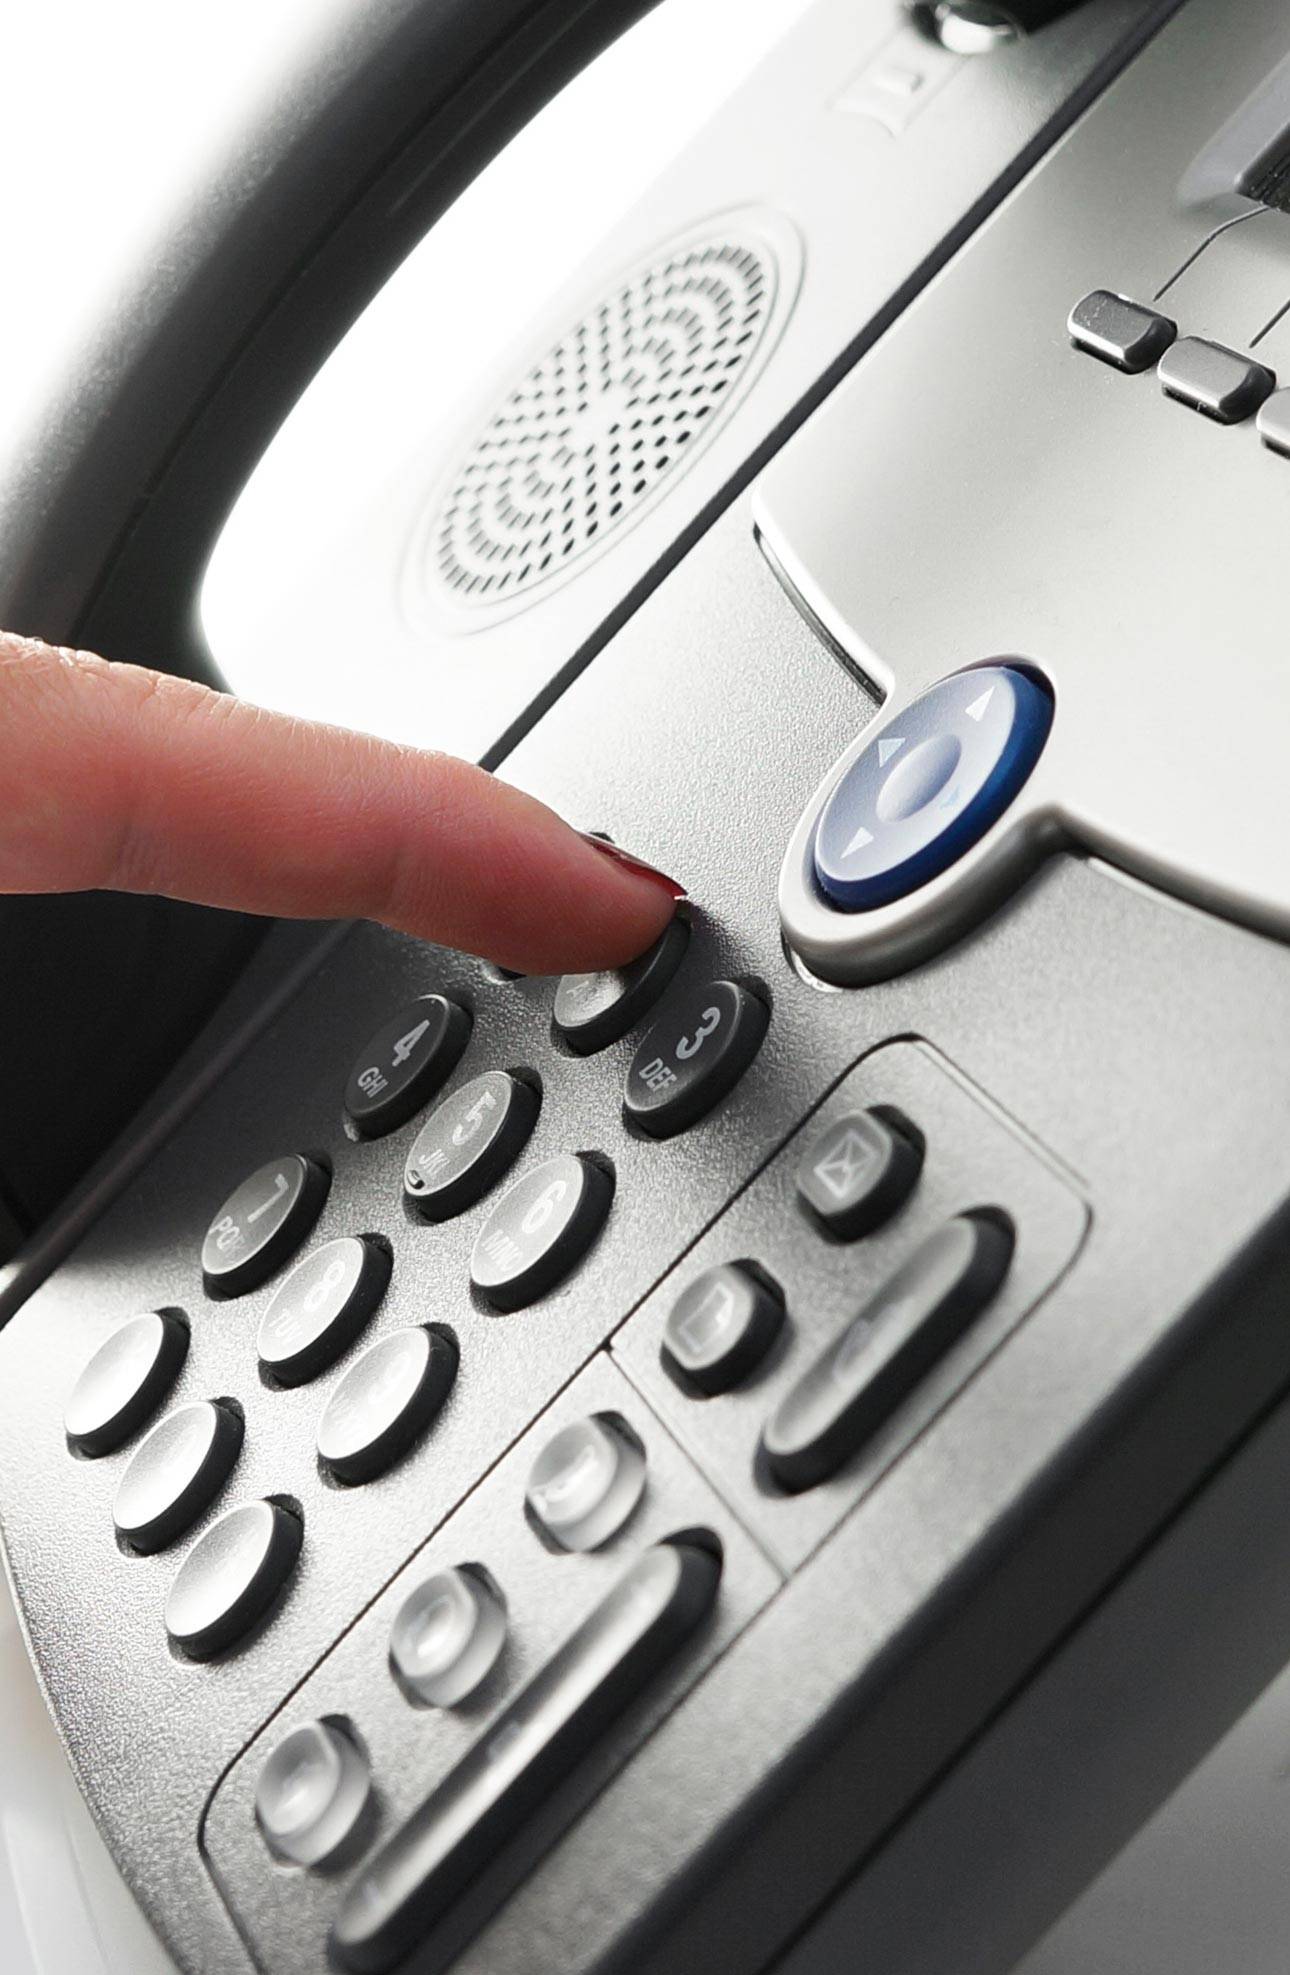 A 3PL Reduced Communication Costs Through Cyzerg’s VoIP Enterprise Phone System